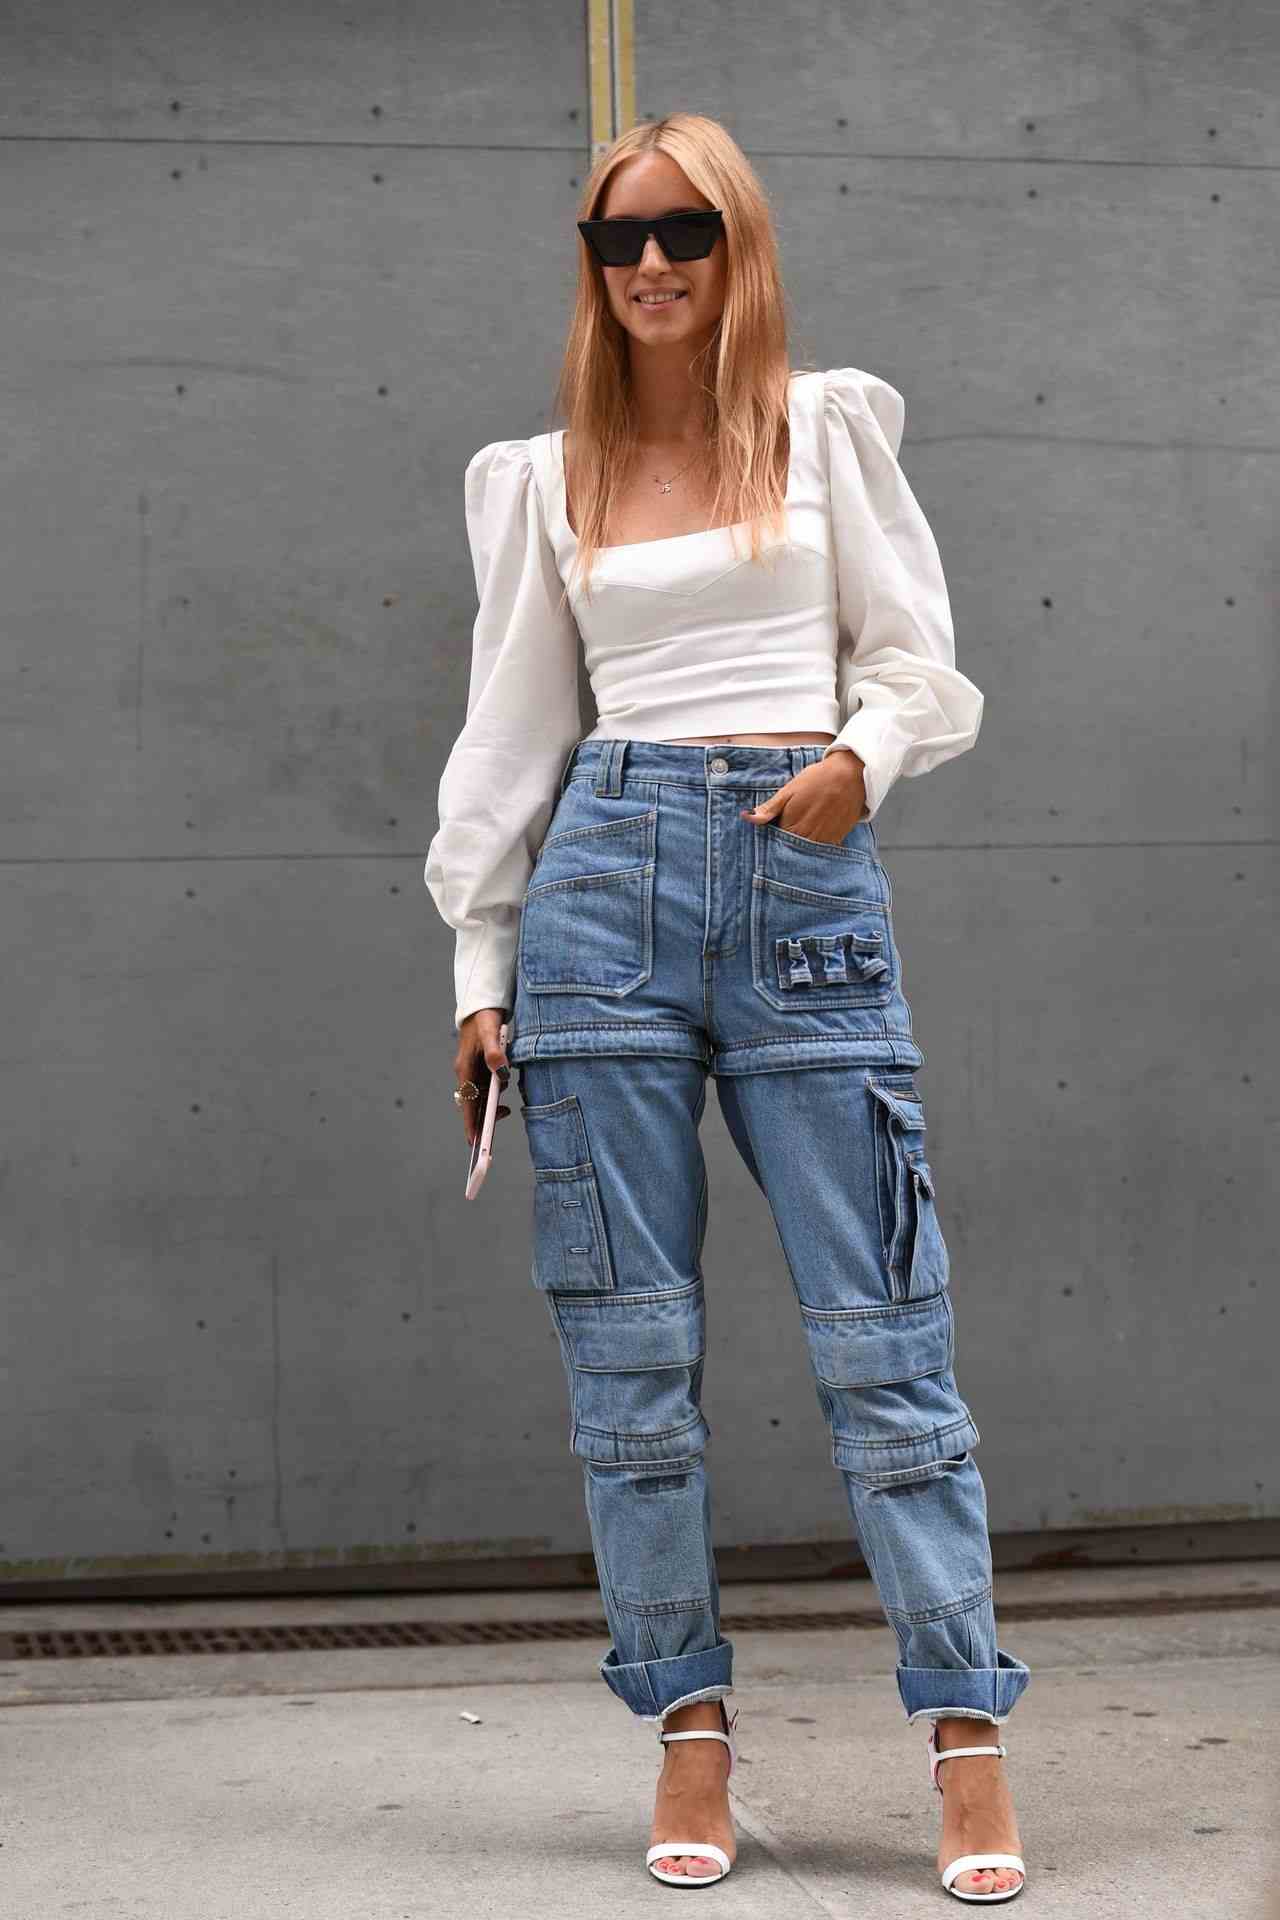 Bluse Puffärmel kombinieren Cargo Jeans hellblau Sandaletten Sommer blonde Haare